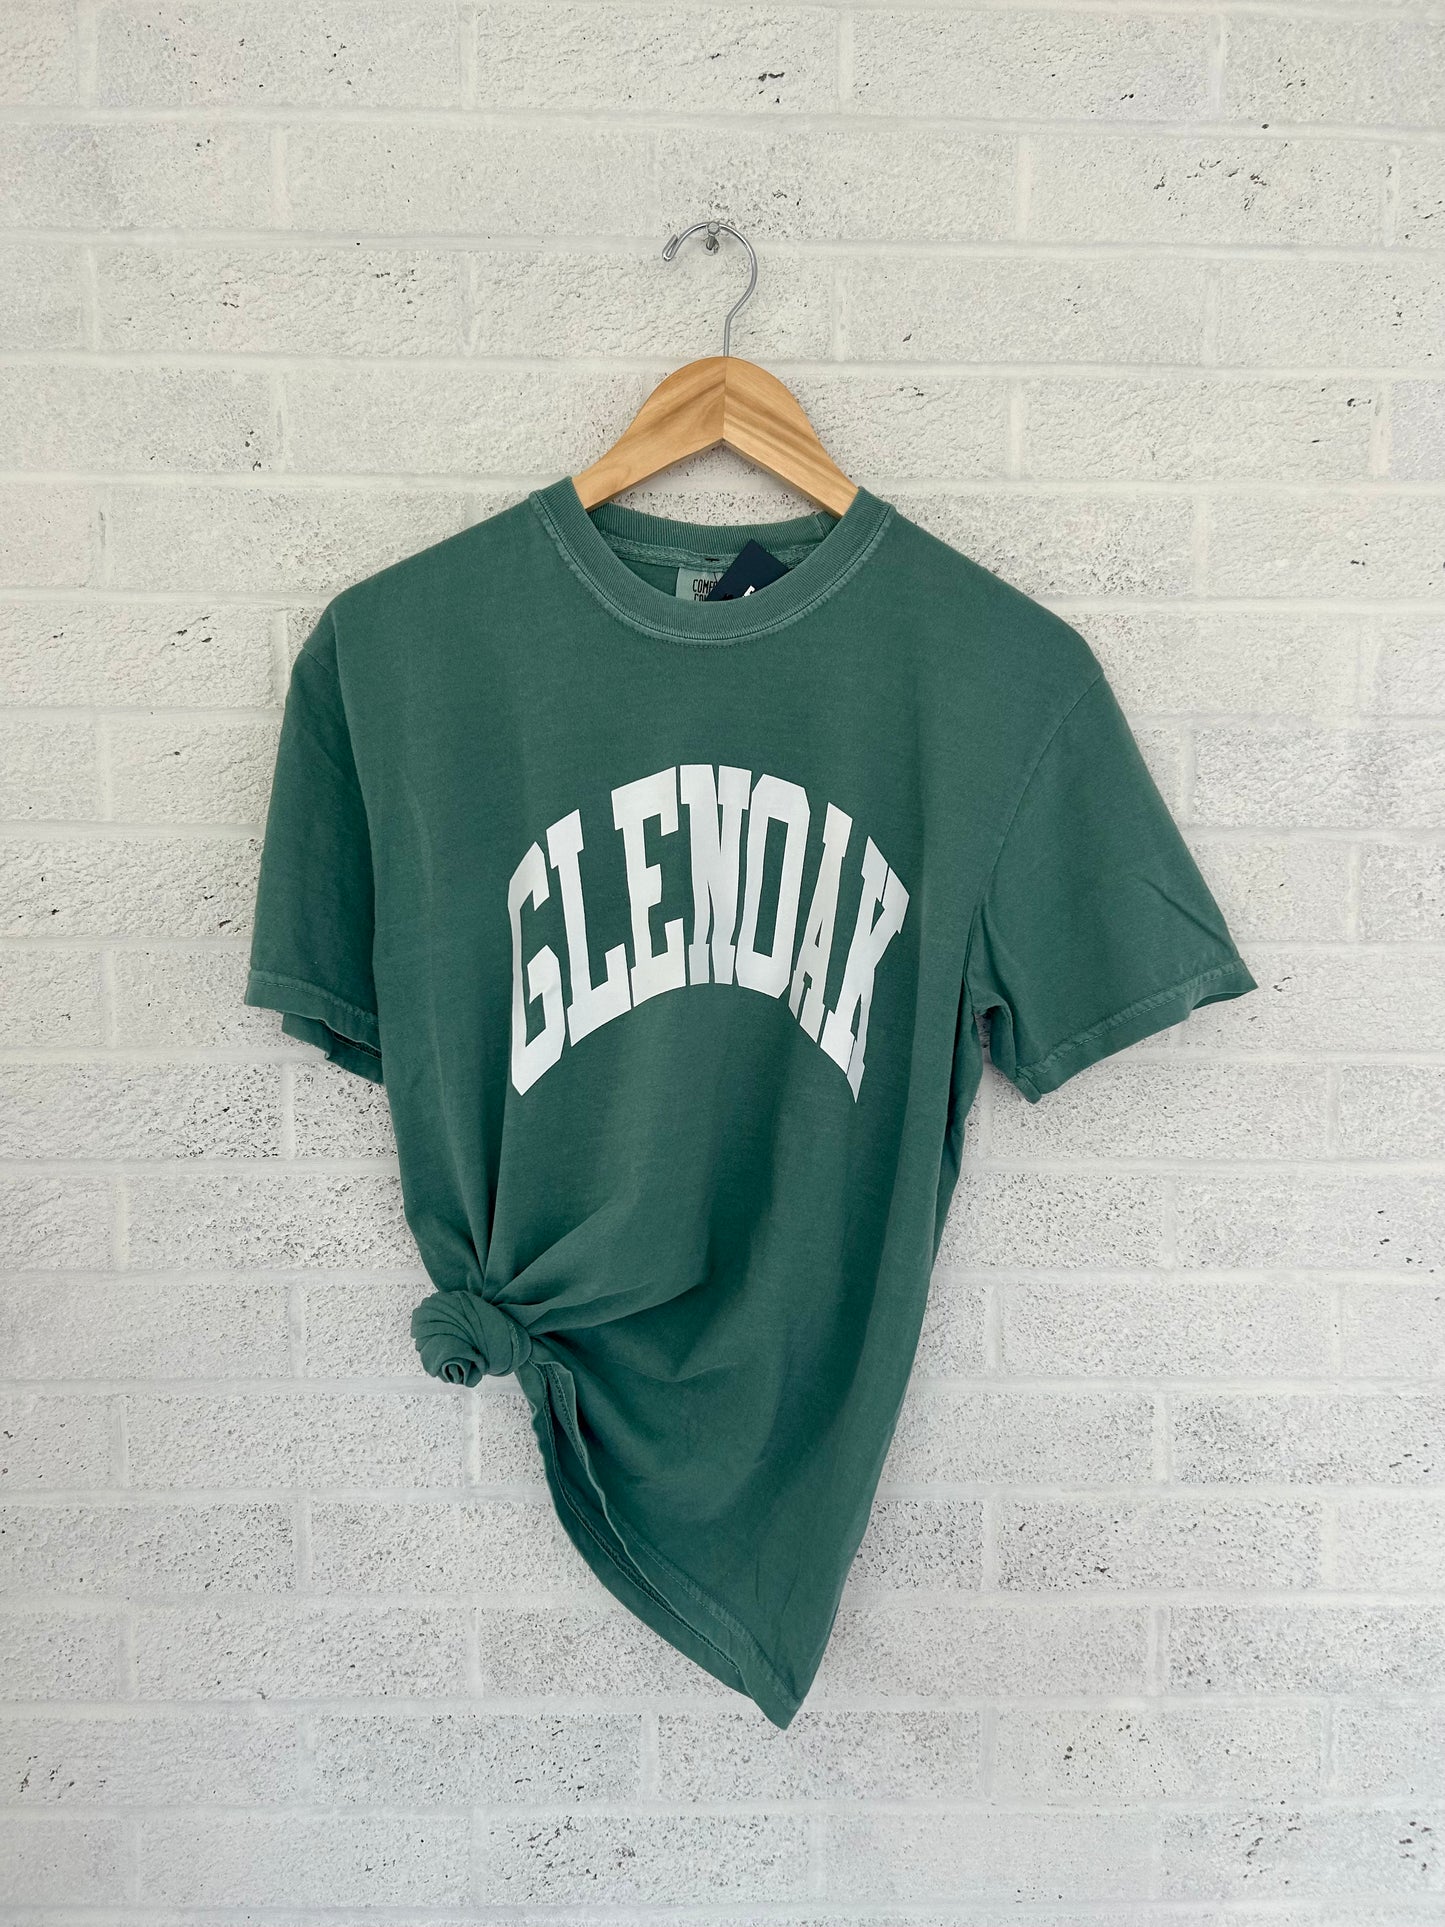 Glenoak Vintage T-shirt